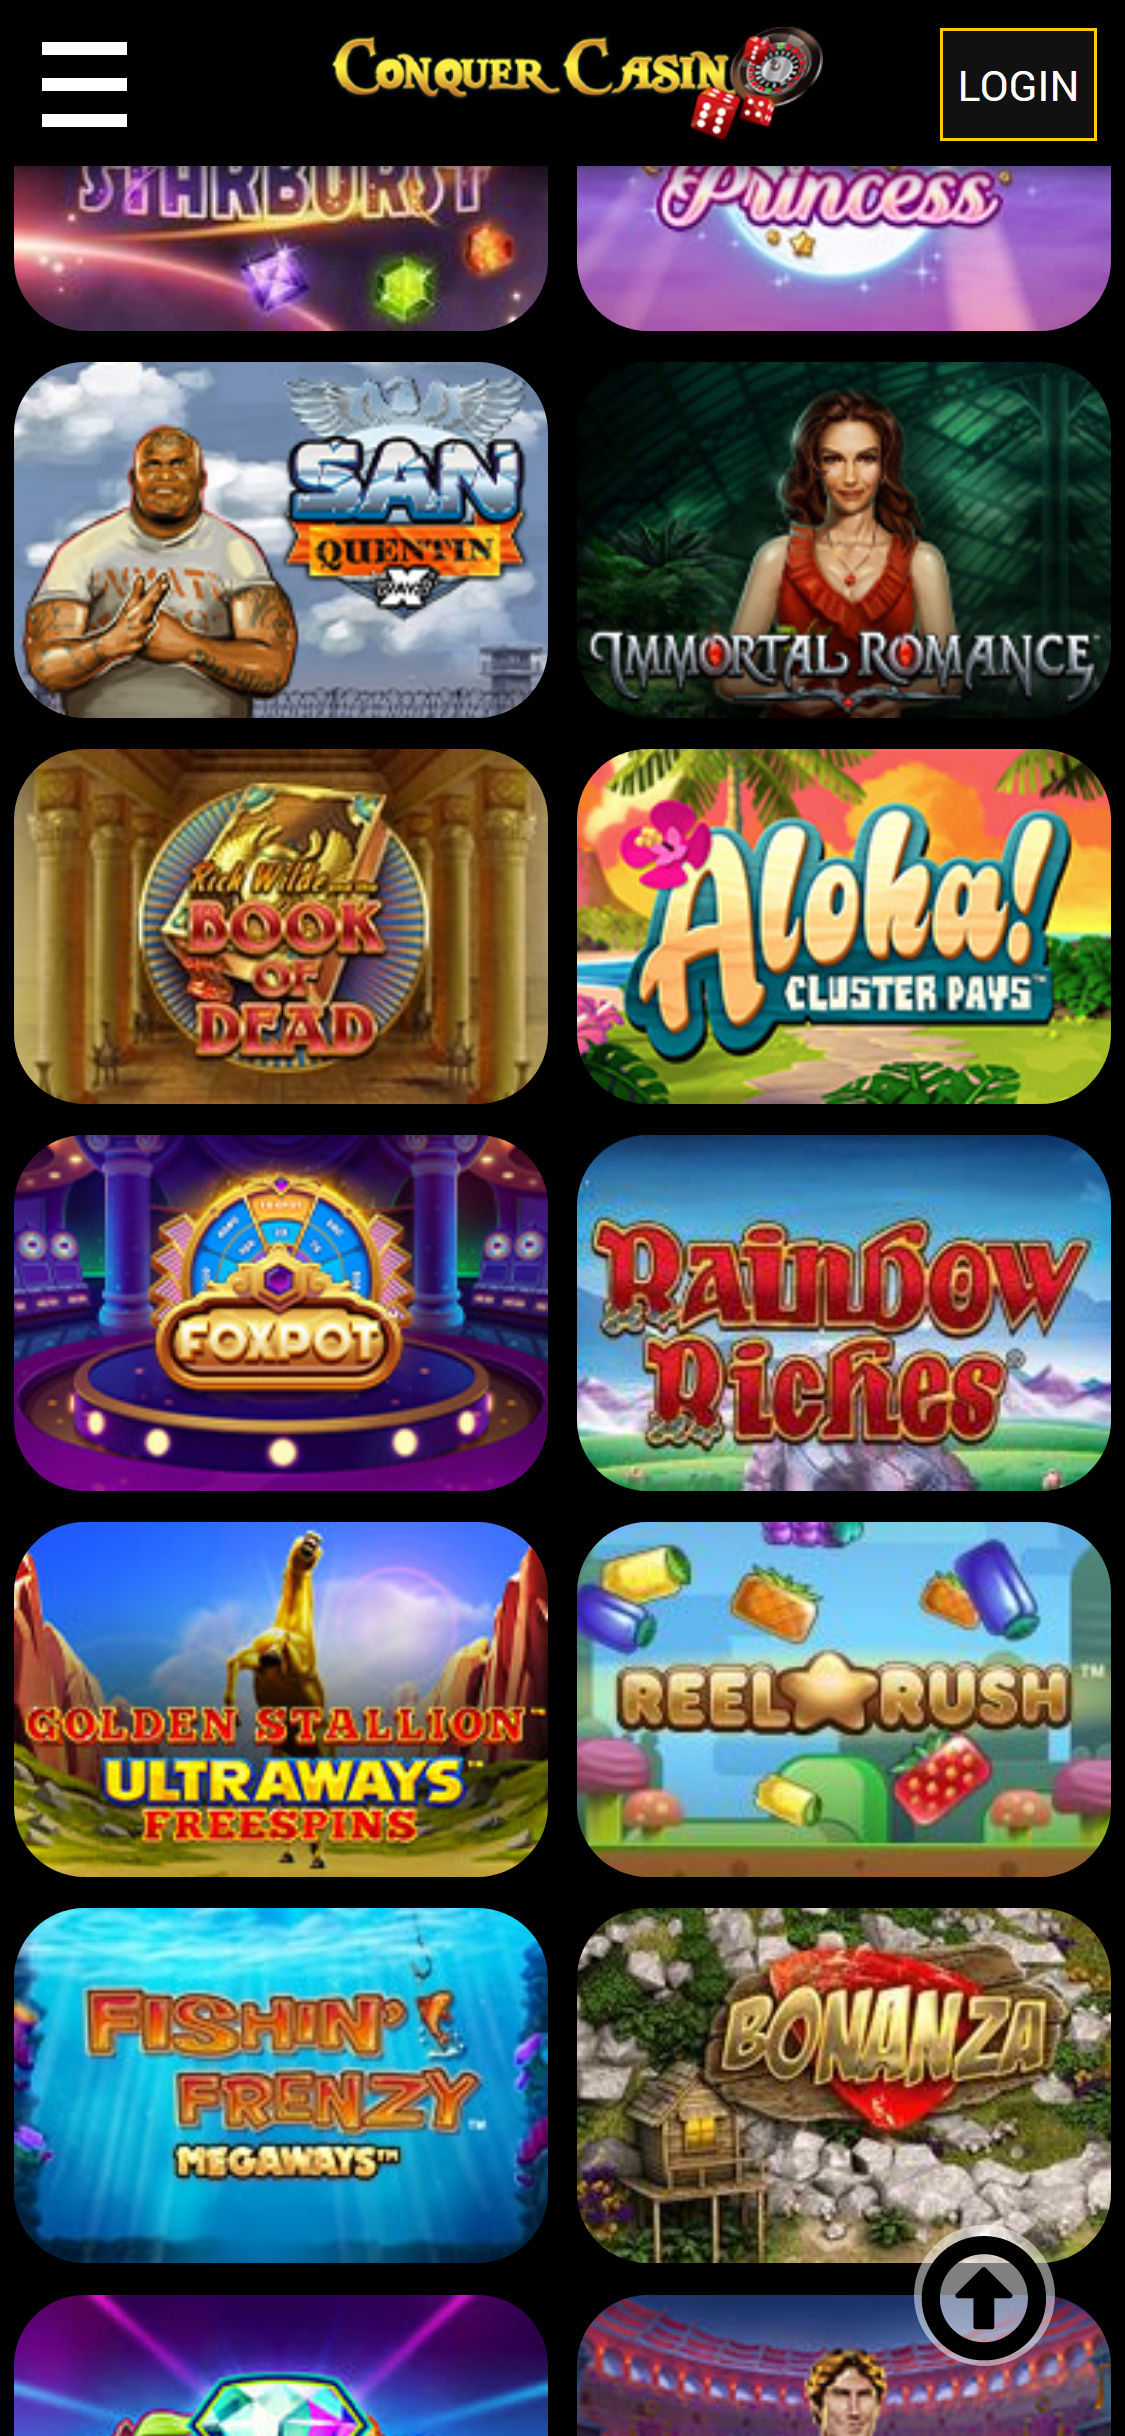 Conquer Casino Mobile Games Review